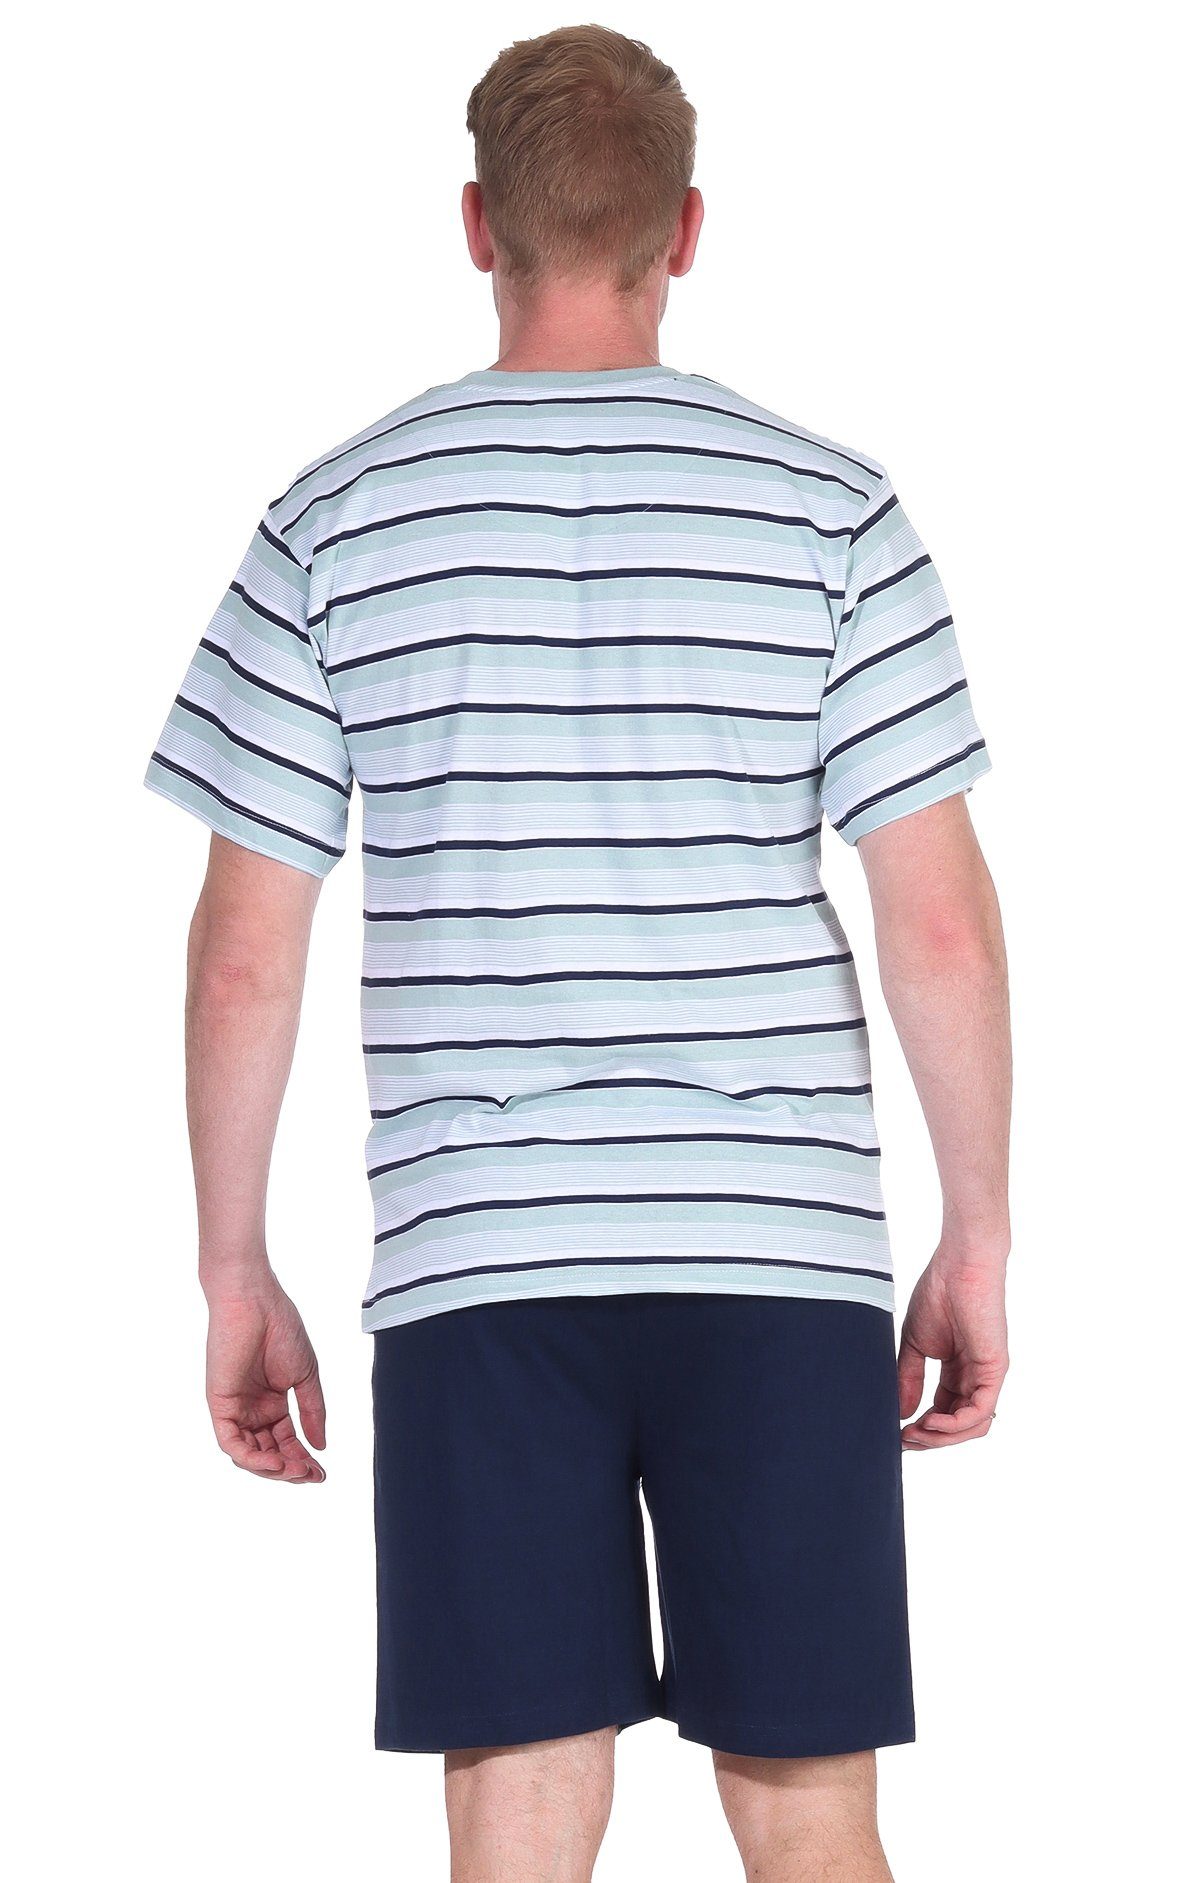 Moonline Shorty 100% Aqua Herren Schlafanzug V-Ausschnitt Shorty mit Single-Jersey Baumwolle Kurzarm